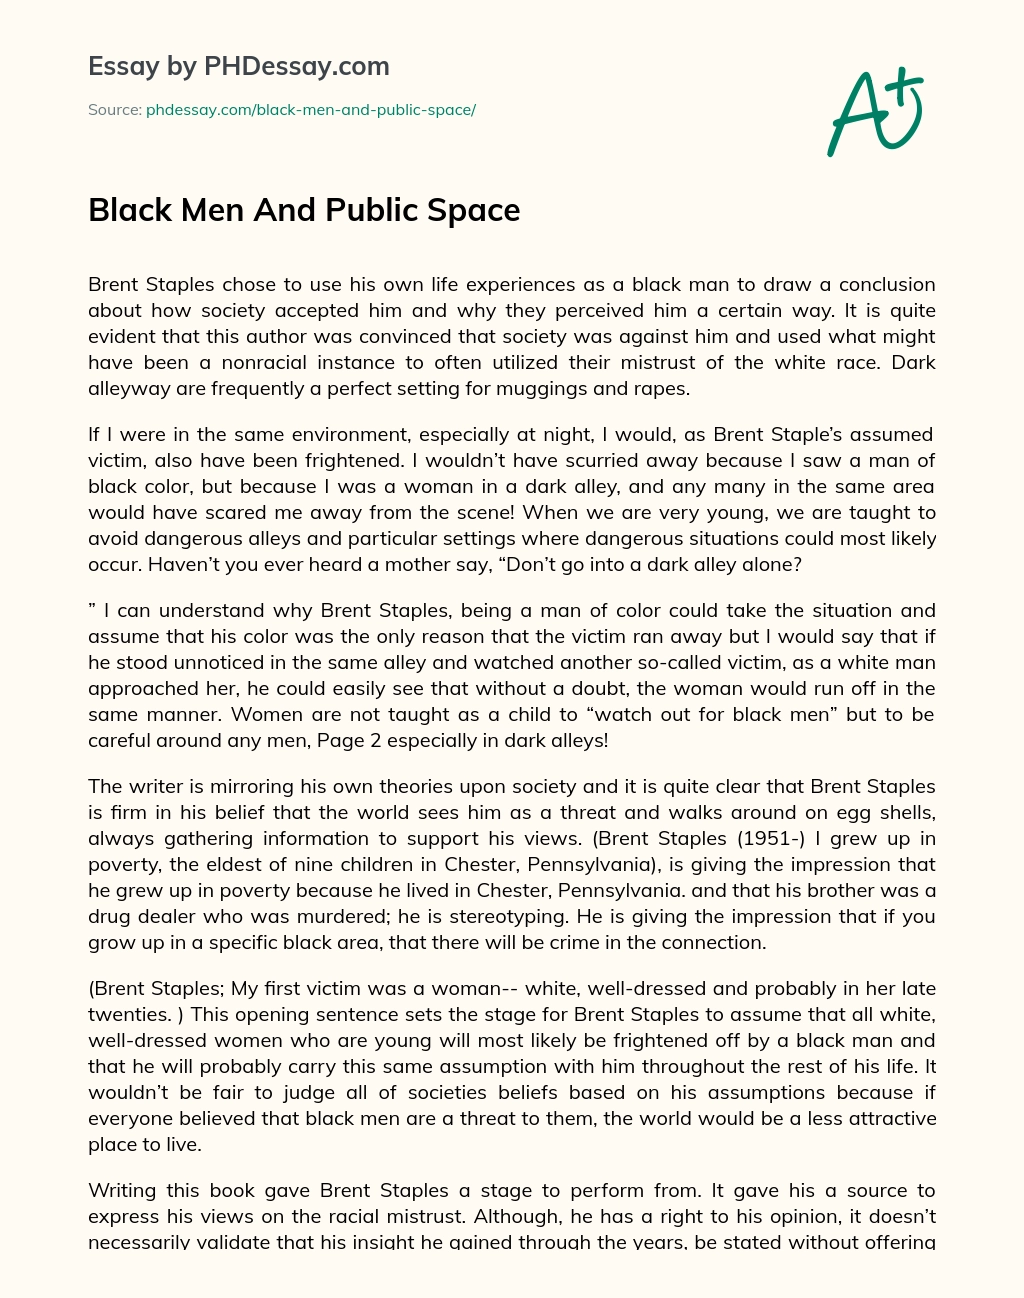 Black Men And Public Space essay